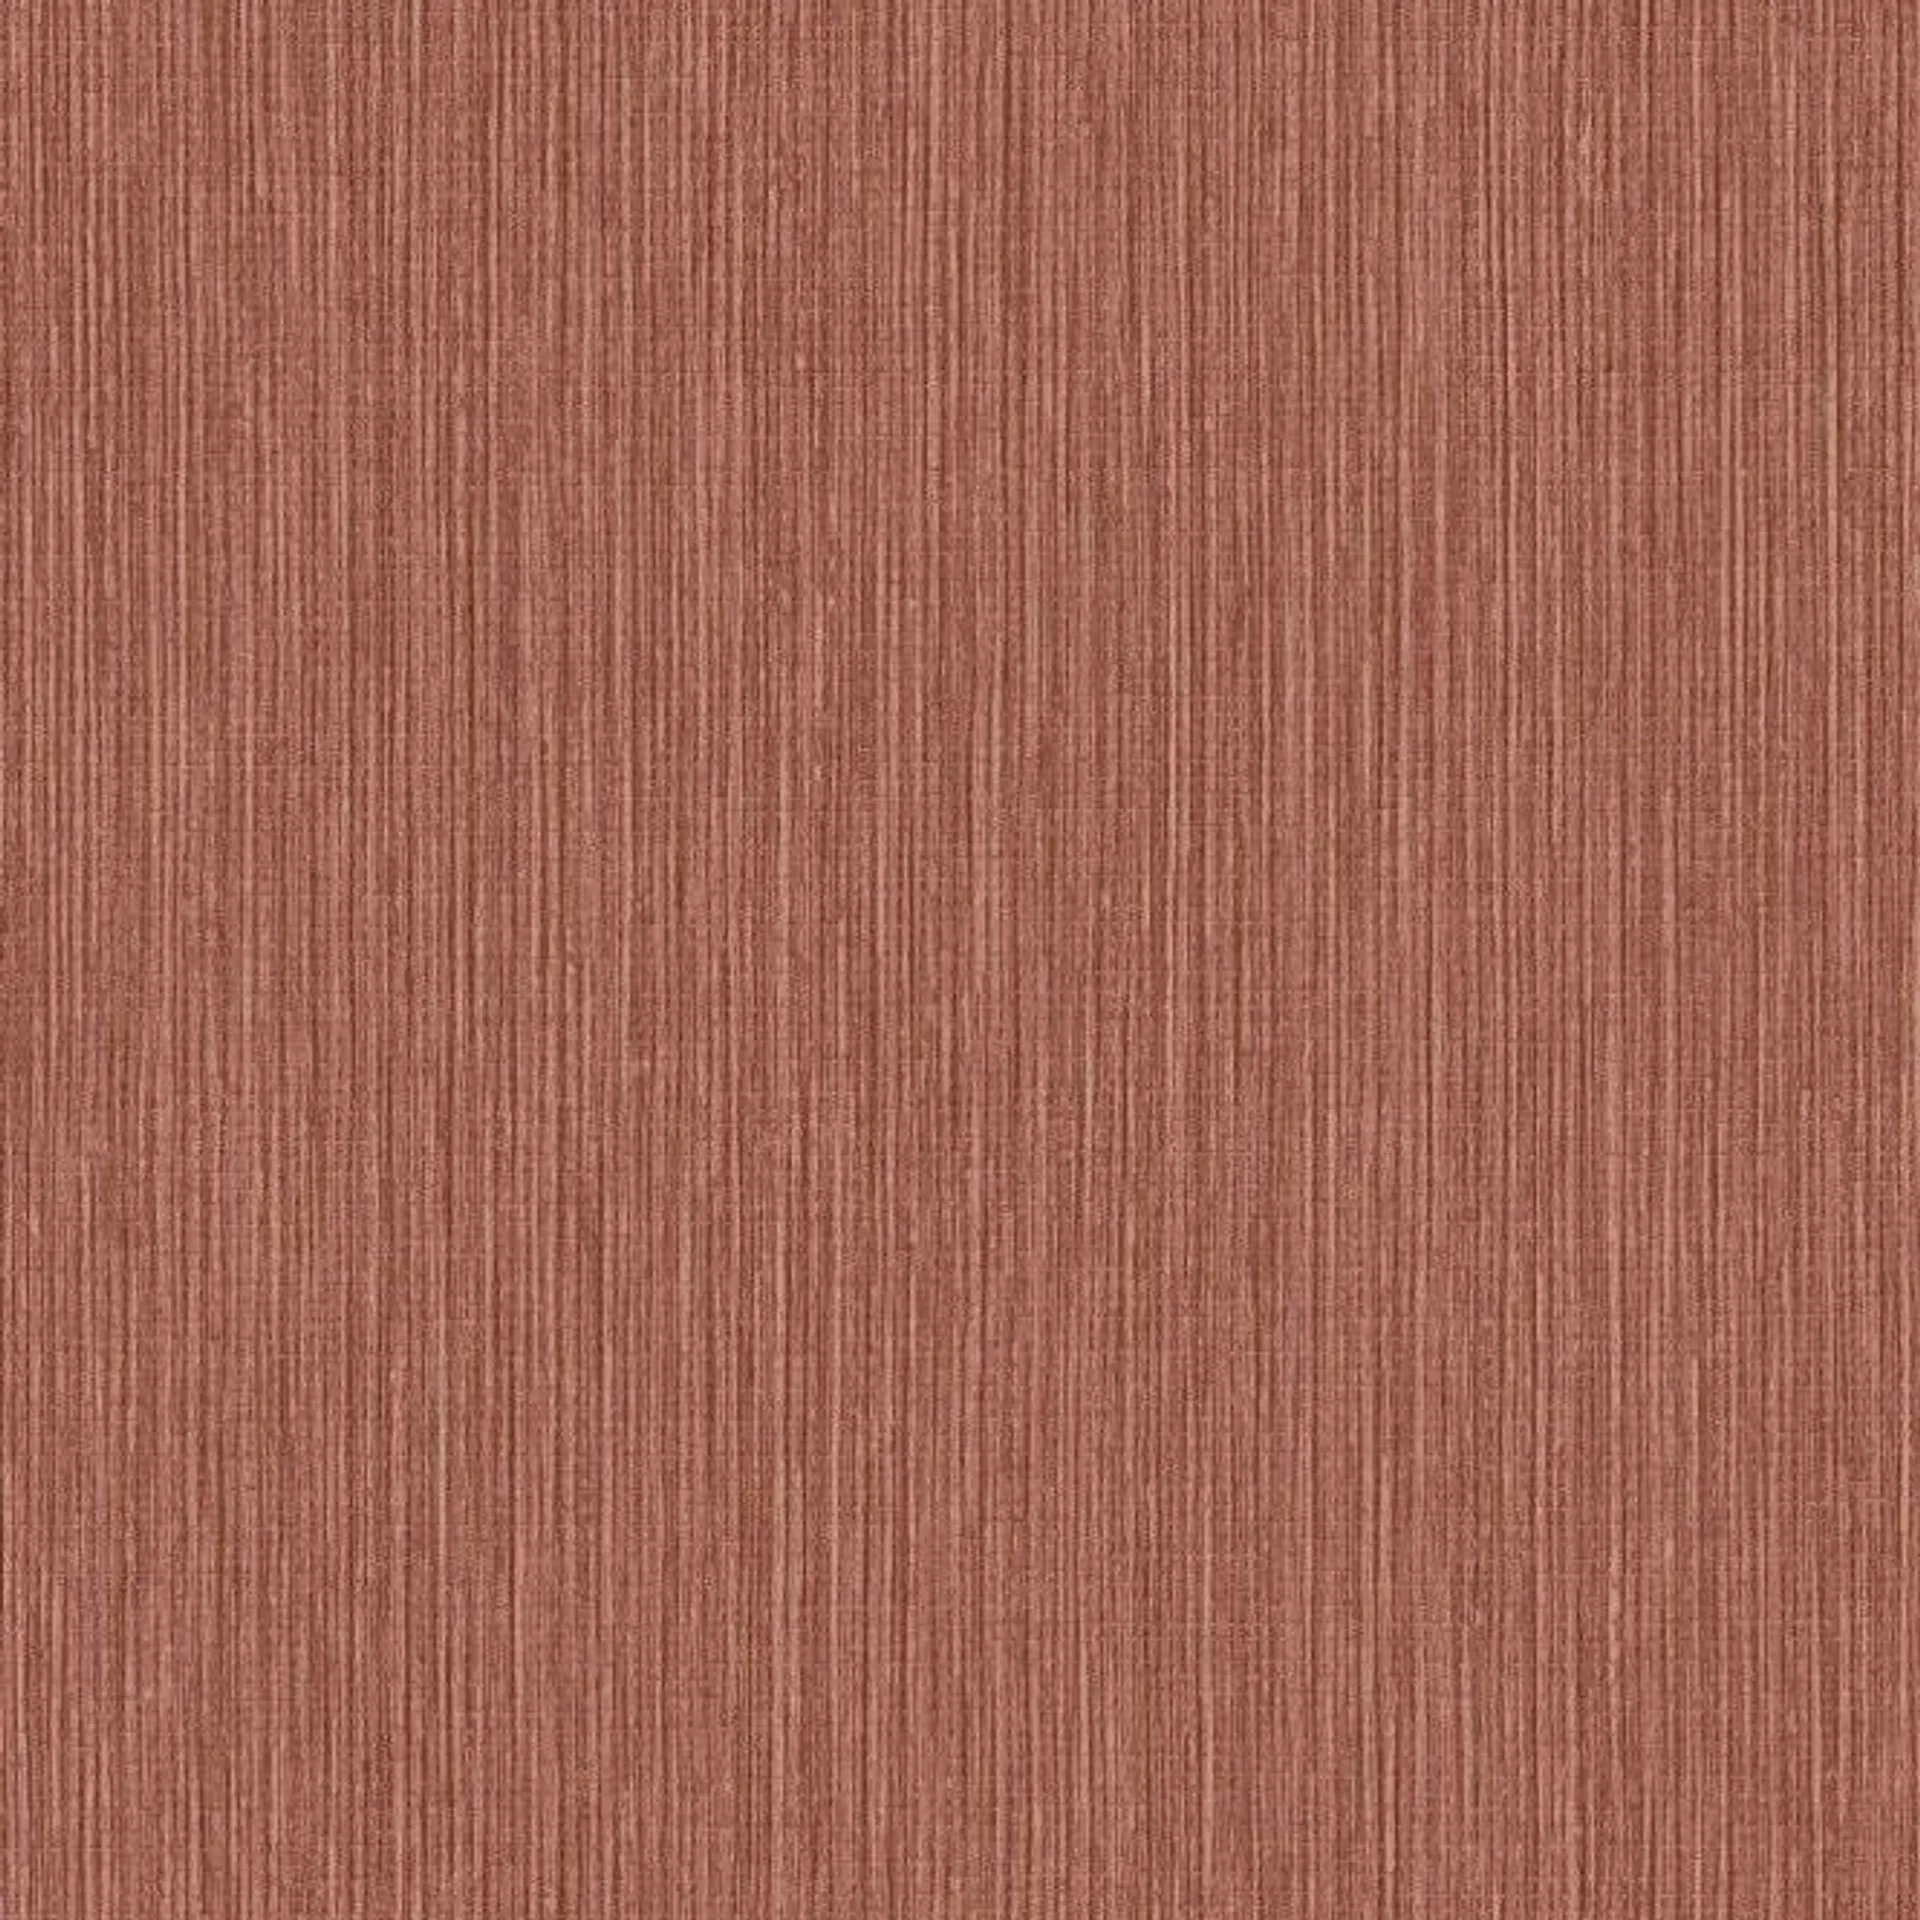 Willow Plain wallpaper in Rust